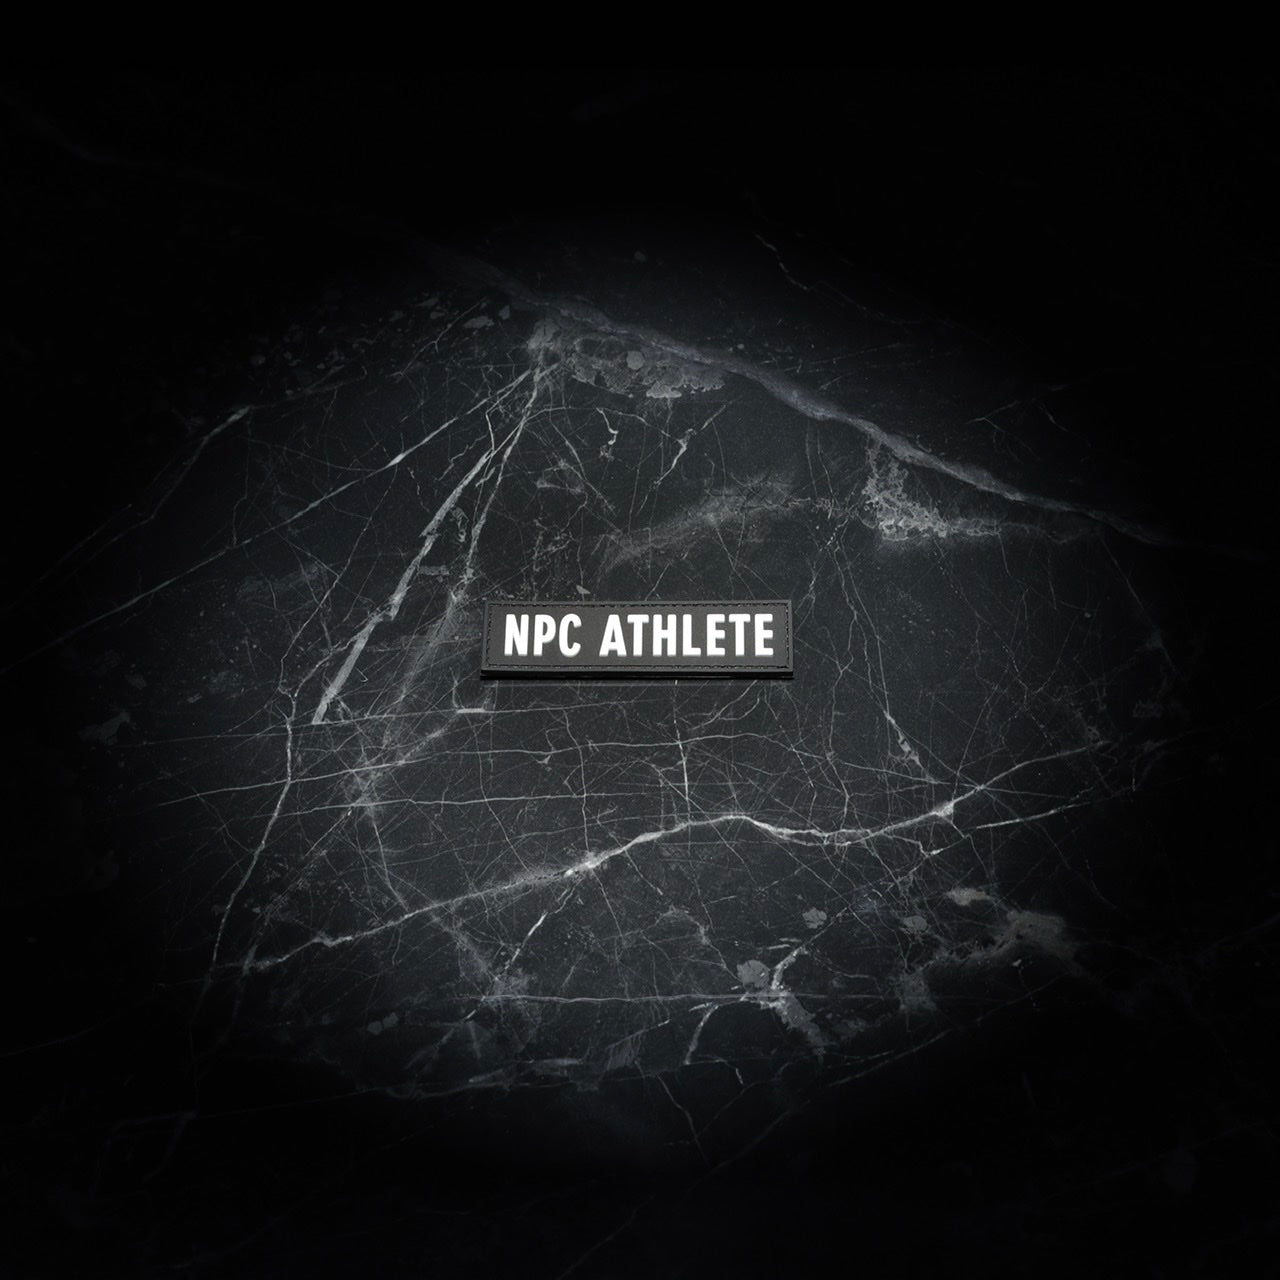 NPC Athlete Black Patch